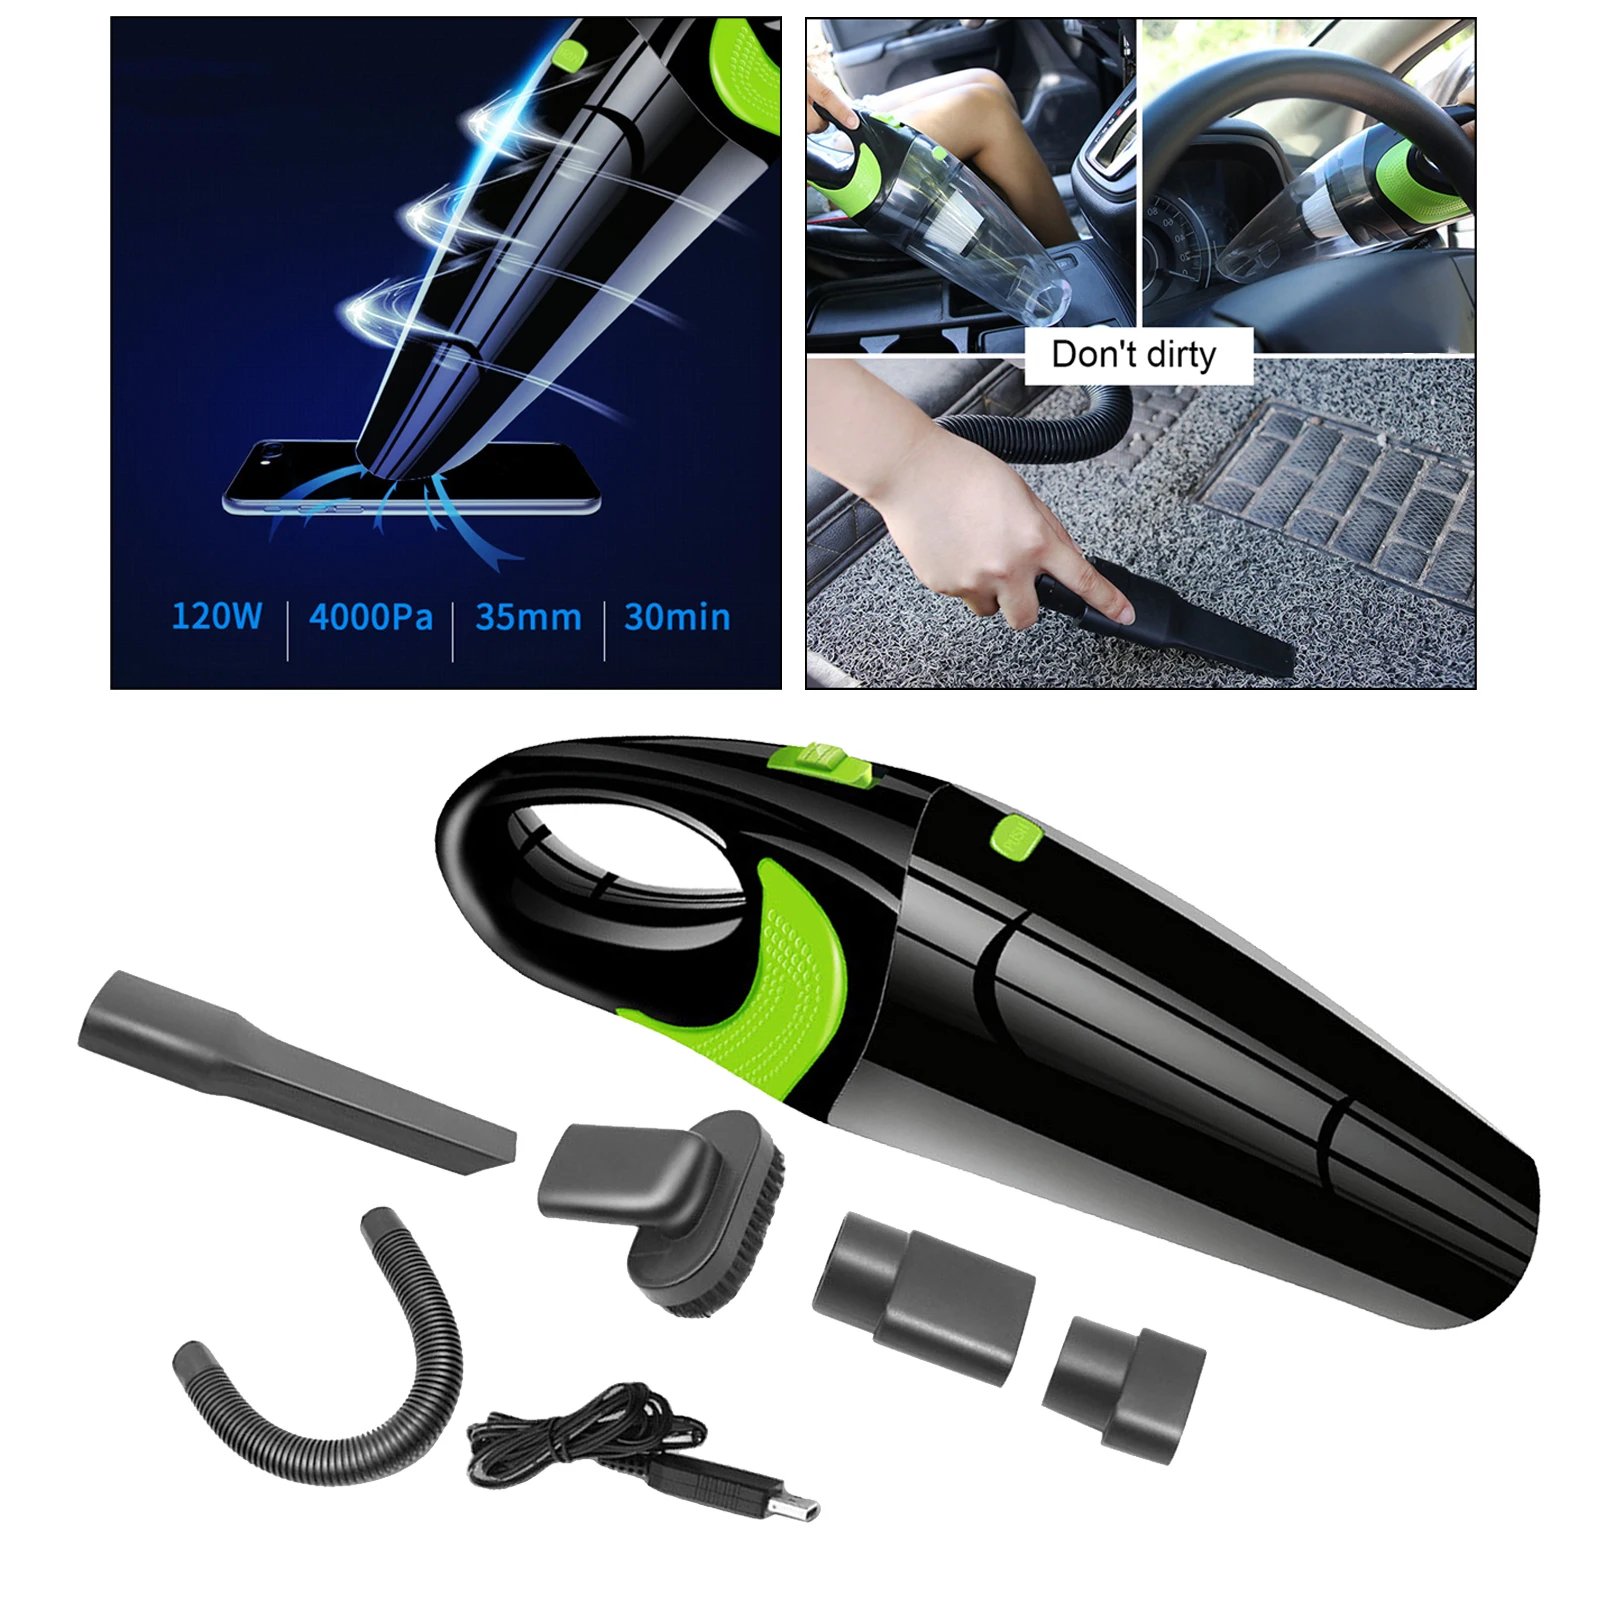 Cordless120W Handheld Electric Hair Dust Vacuum Wet Dry Cleaner Corded 